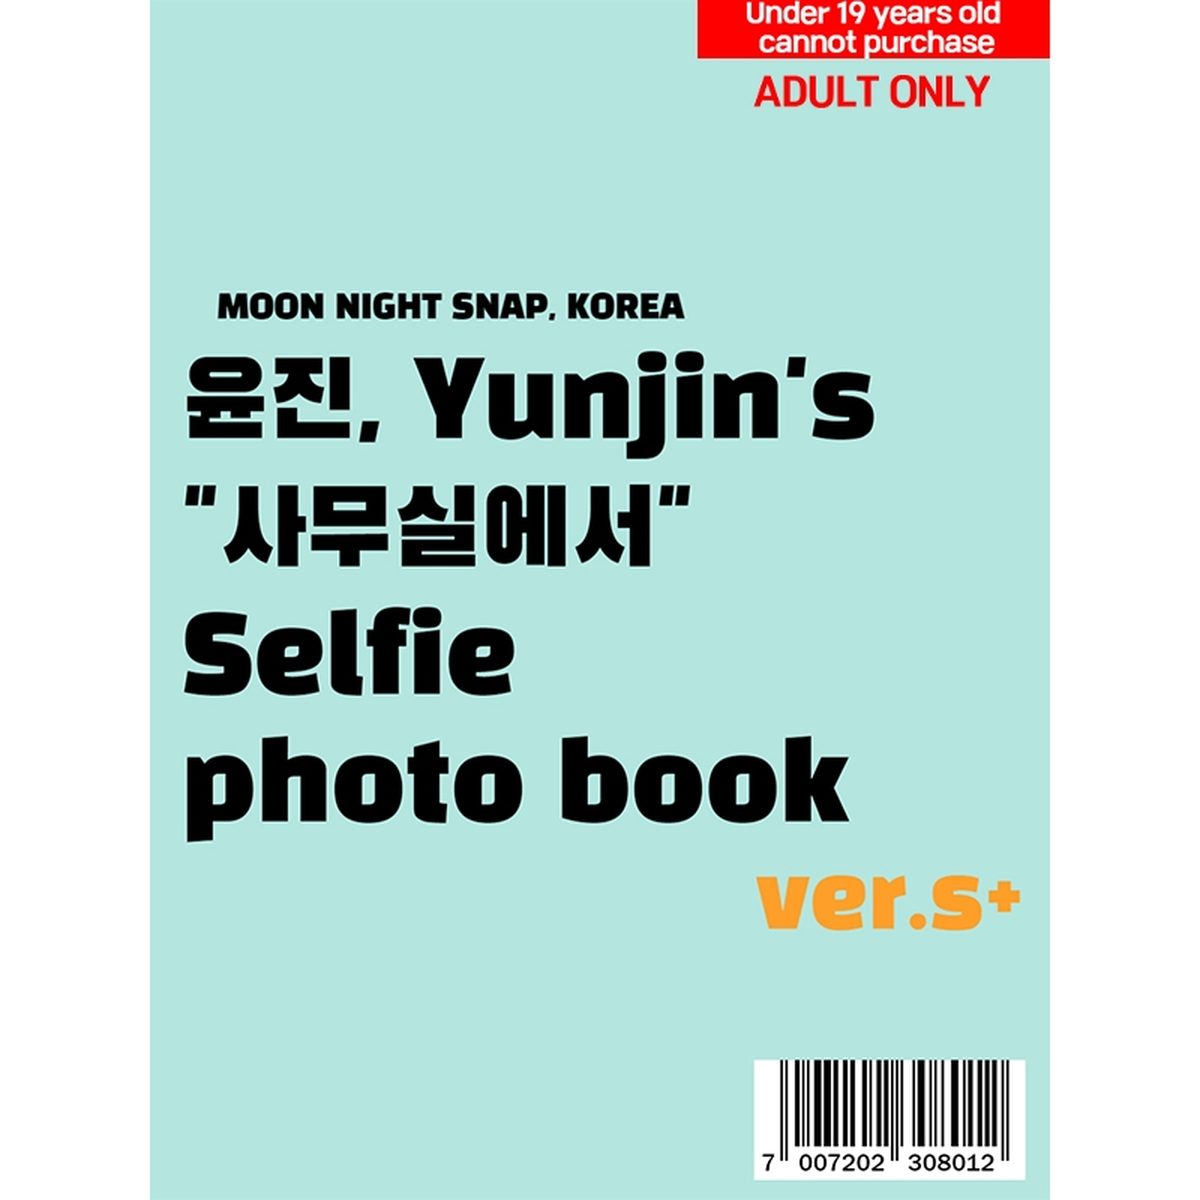 Moon Night Snap Yunjin In The Office 0001 8177818300.jpg